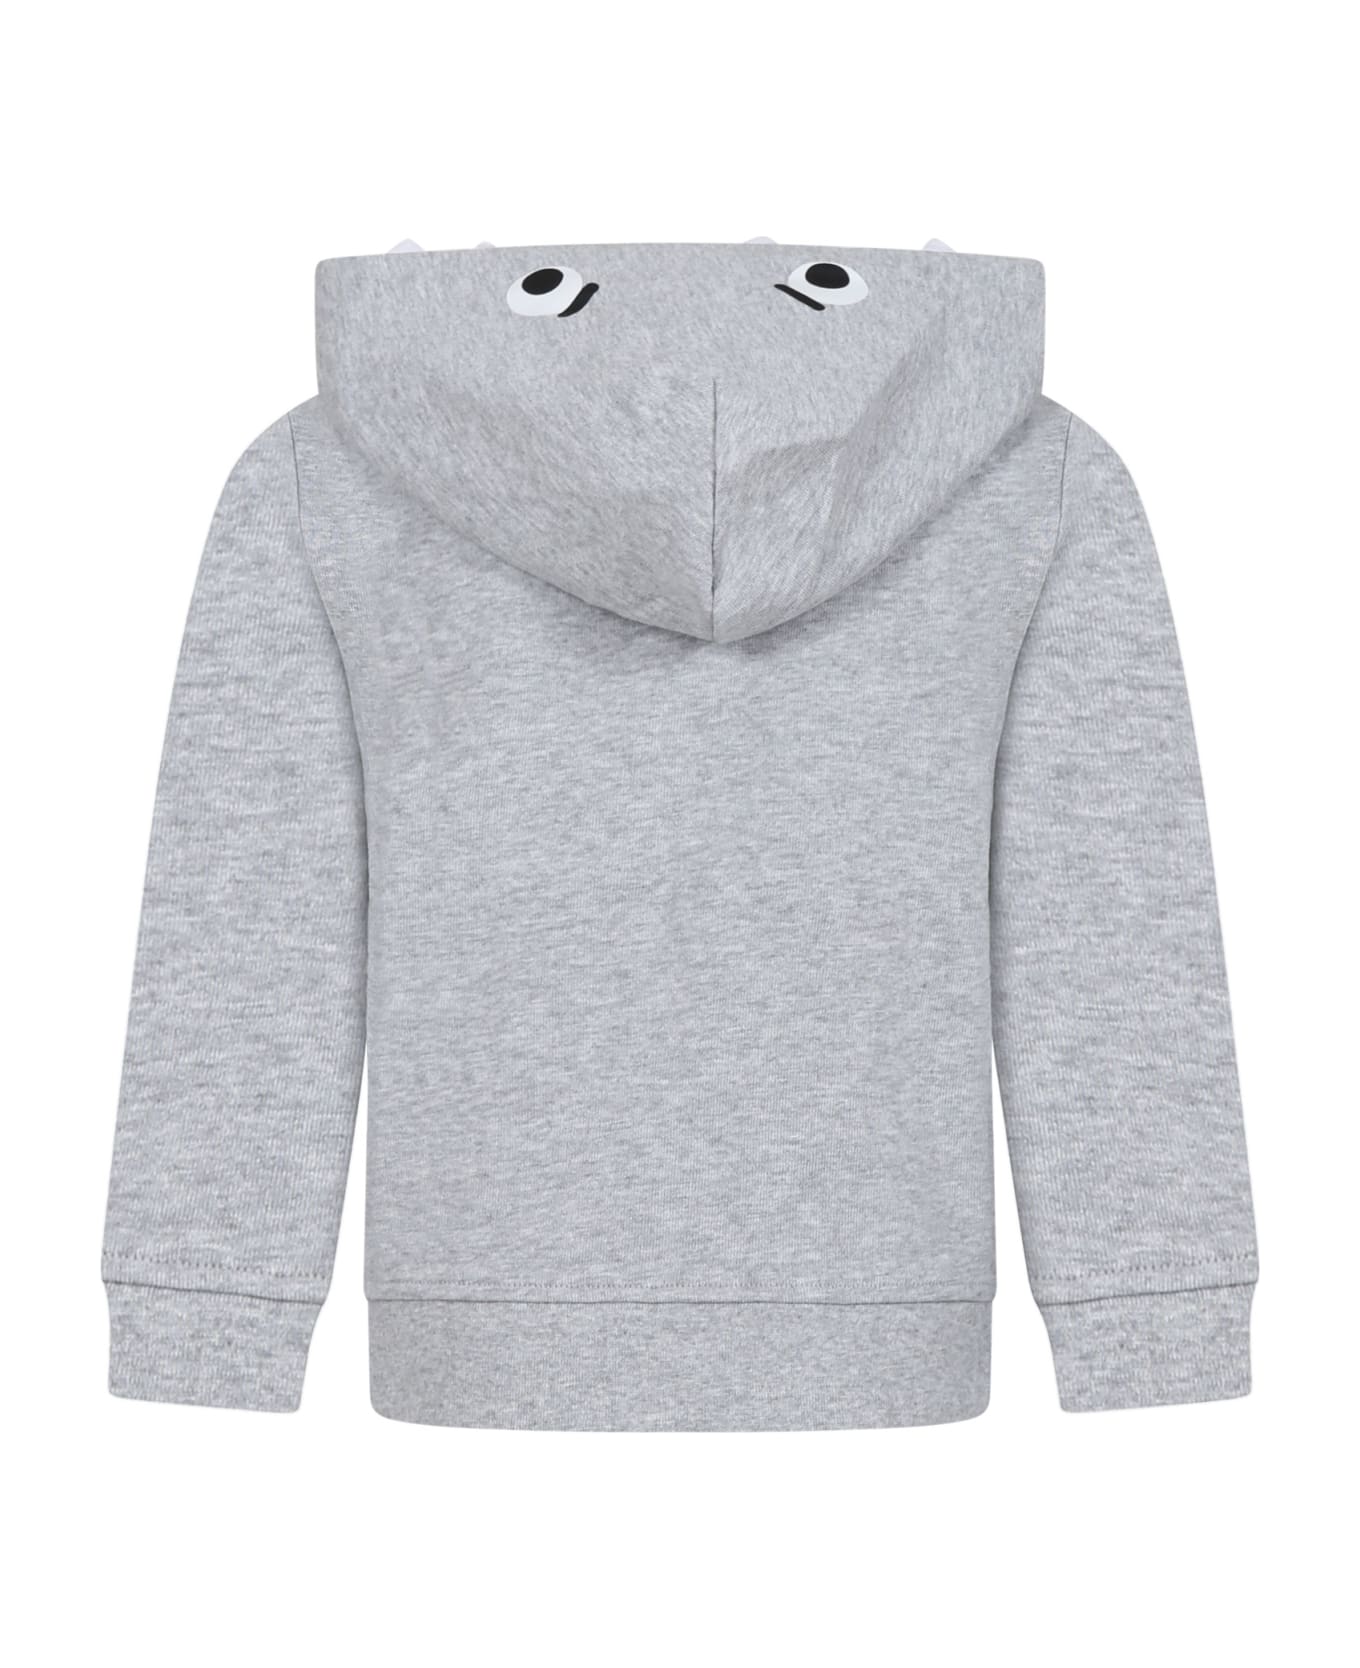 Stella McCartney Kids Gray Sweatshirt For Boys With Print - Grey